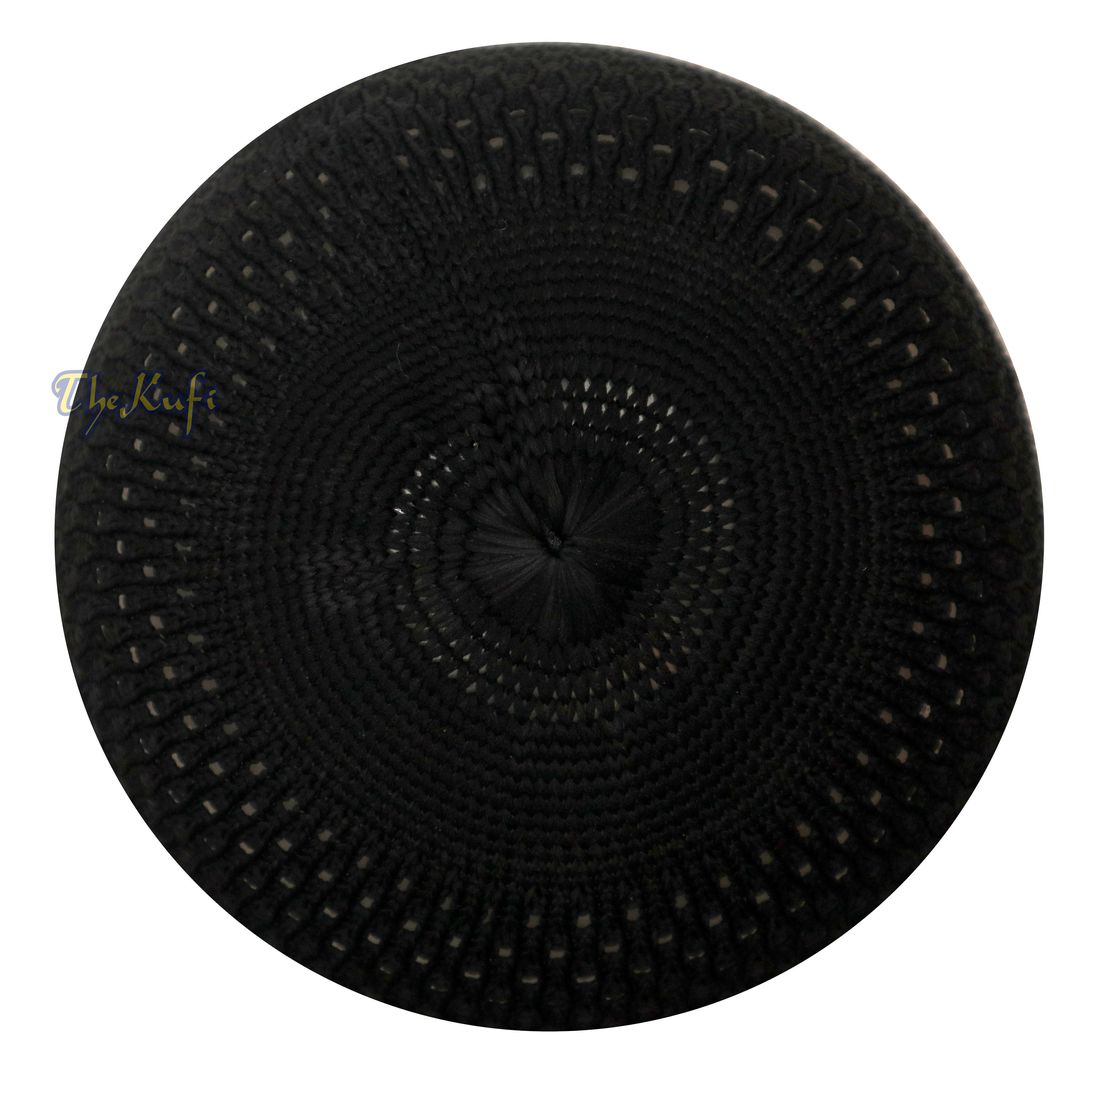 Black Nylon Kufi – Open-weave Stretchy Comfortable Muslim Skull Prayer Cap Head Cover